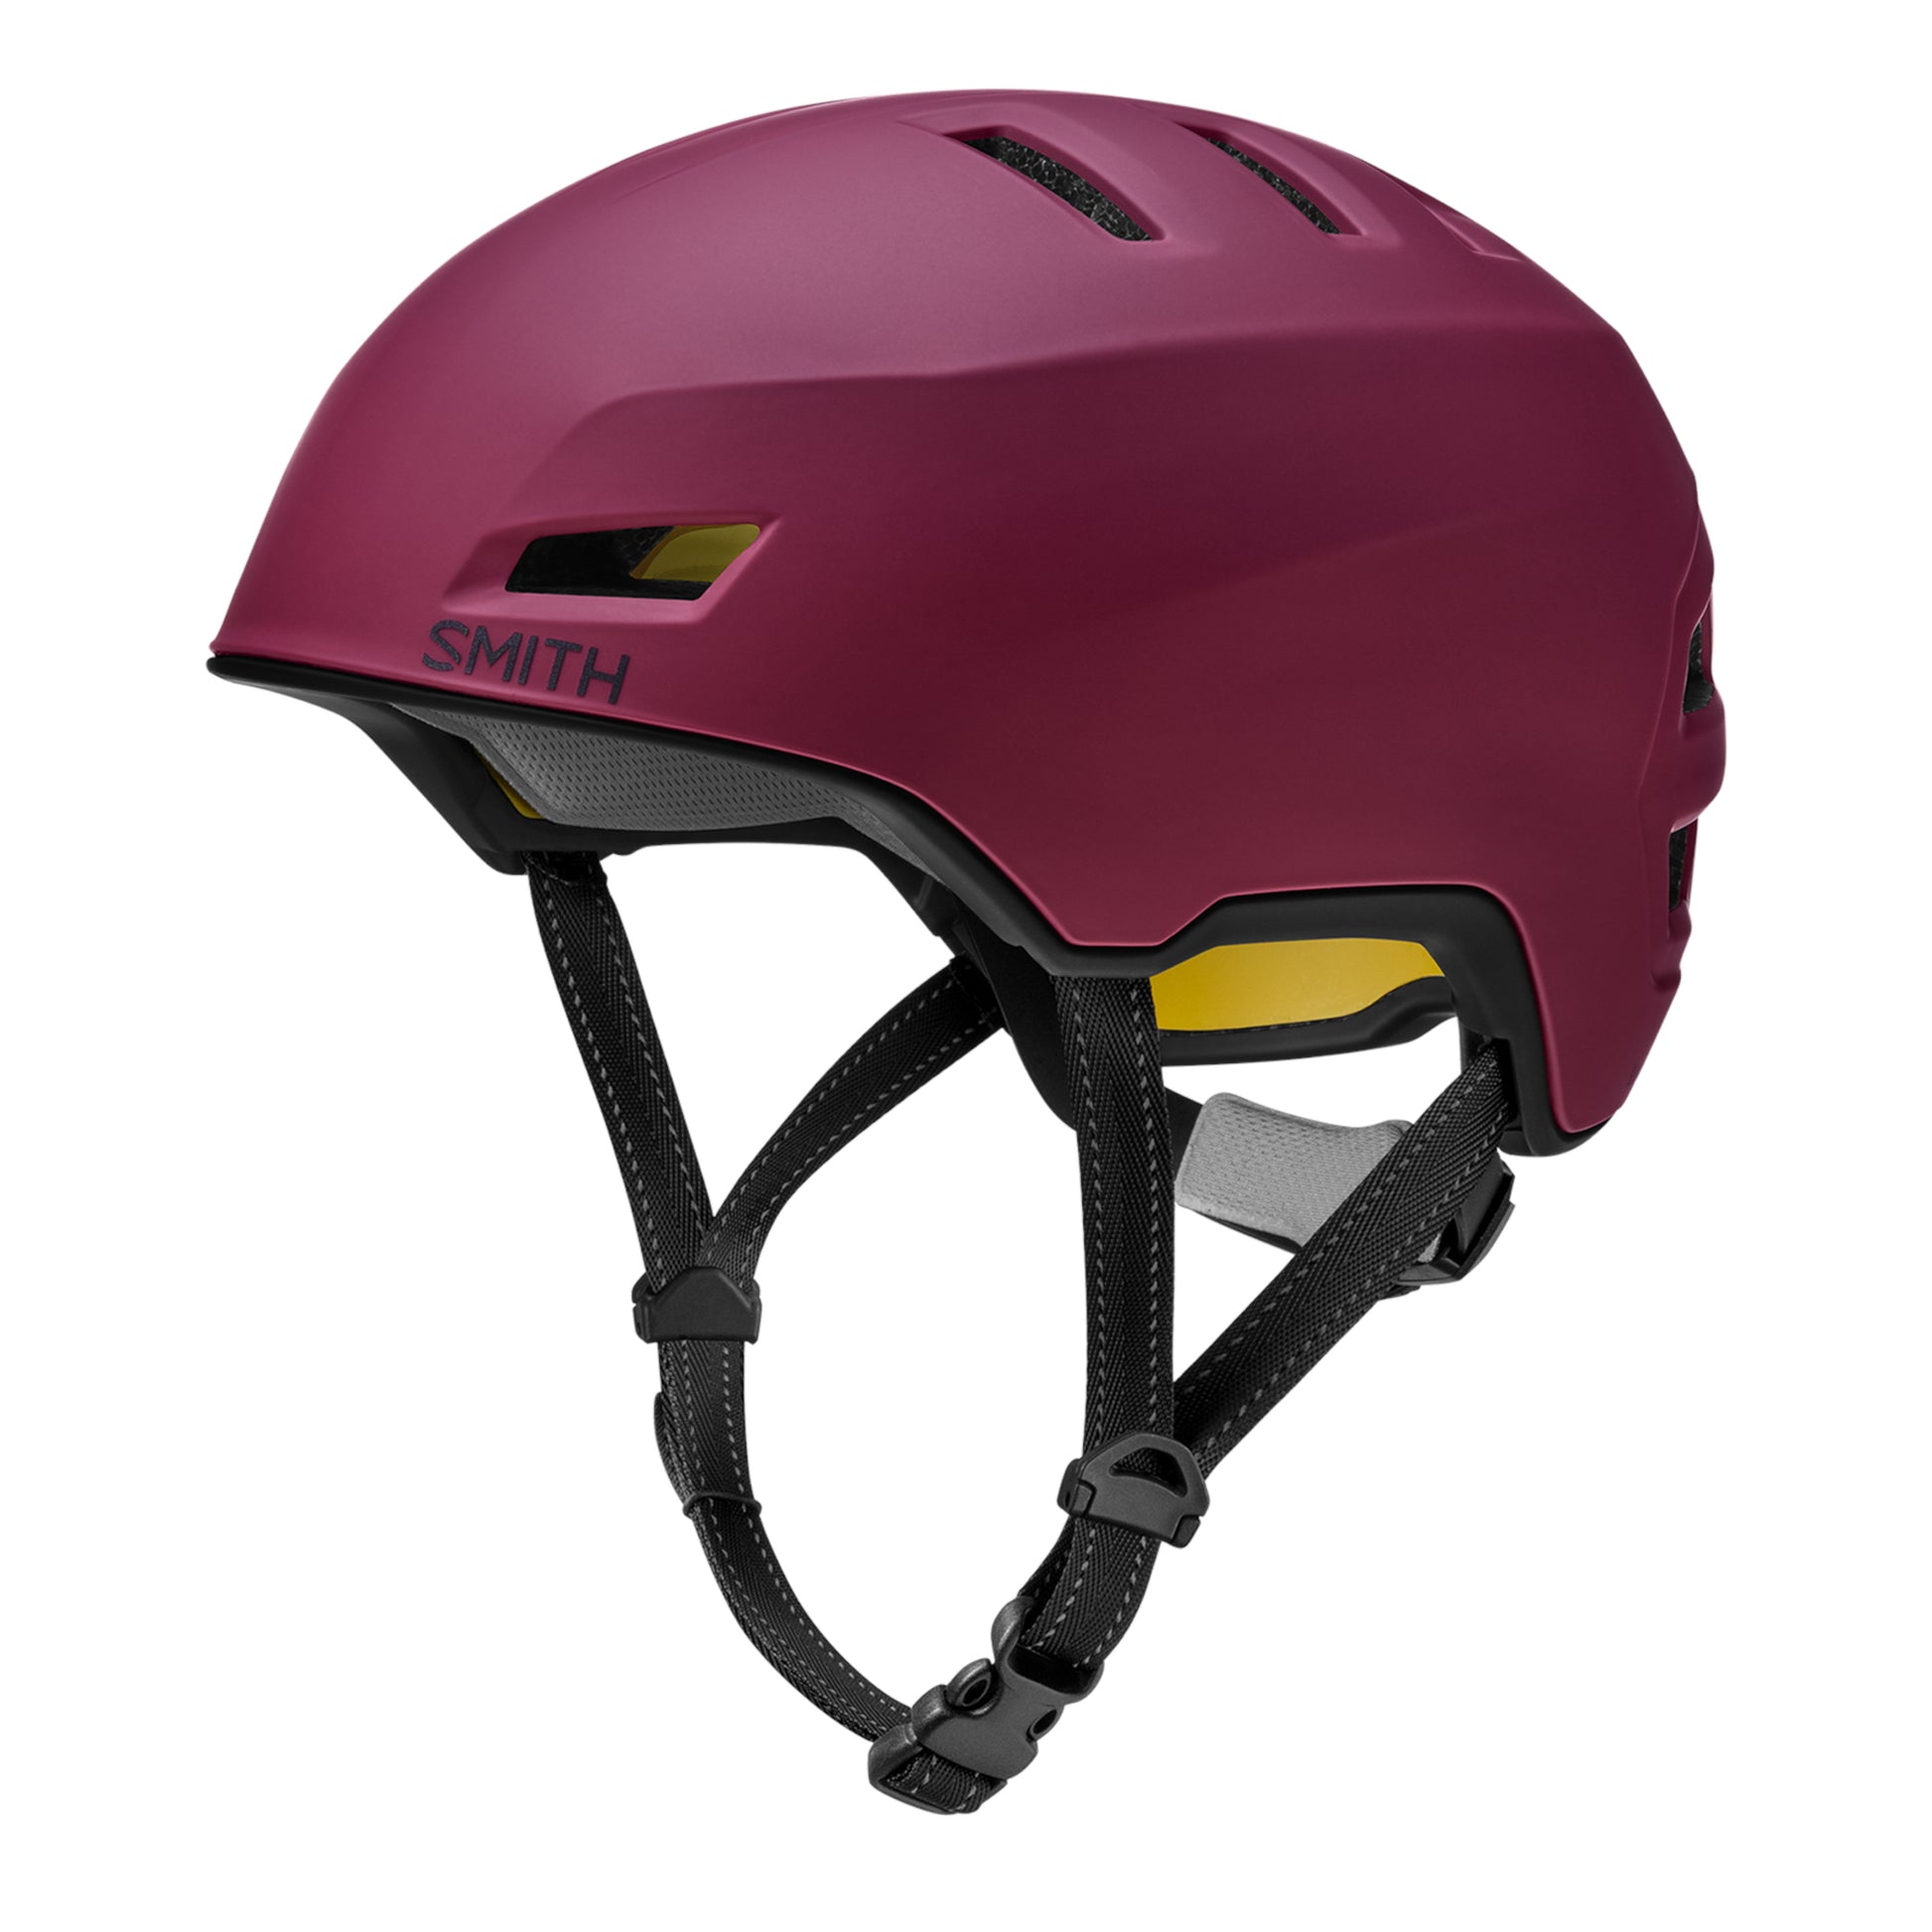 Smith Optics Express MIPS Road Commute Helmet Matte Merlot side view visor removed